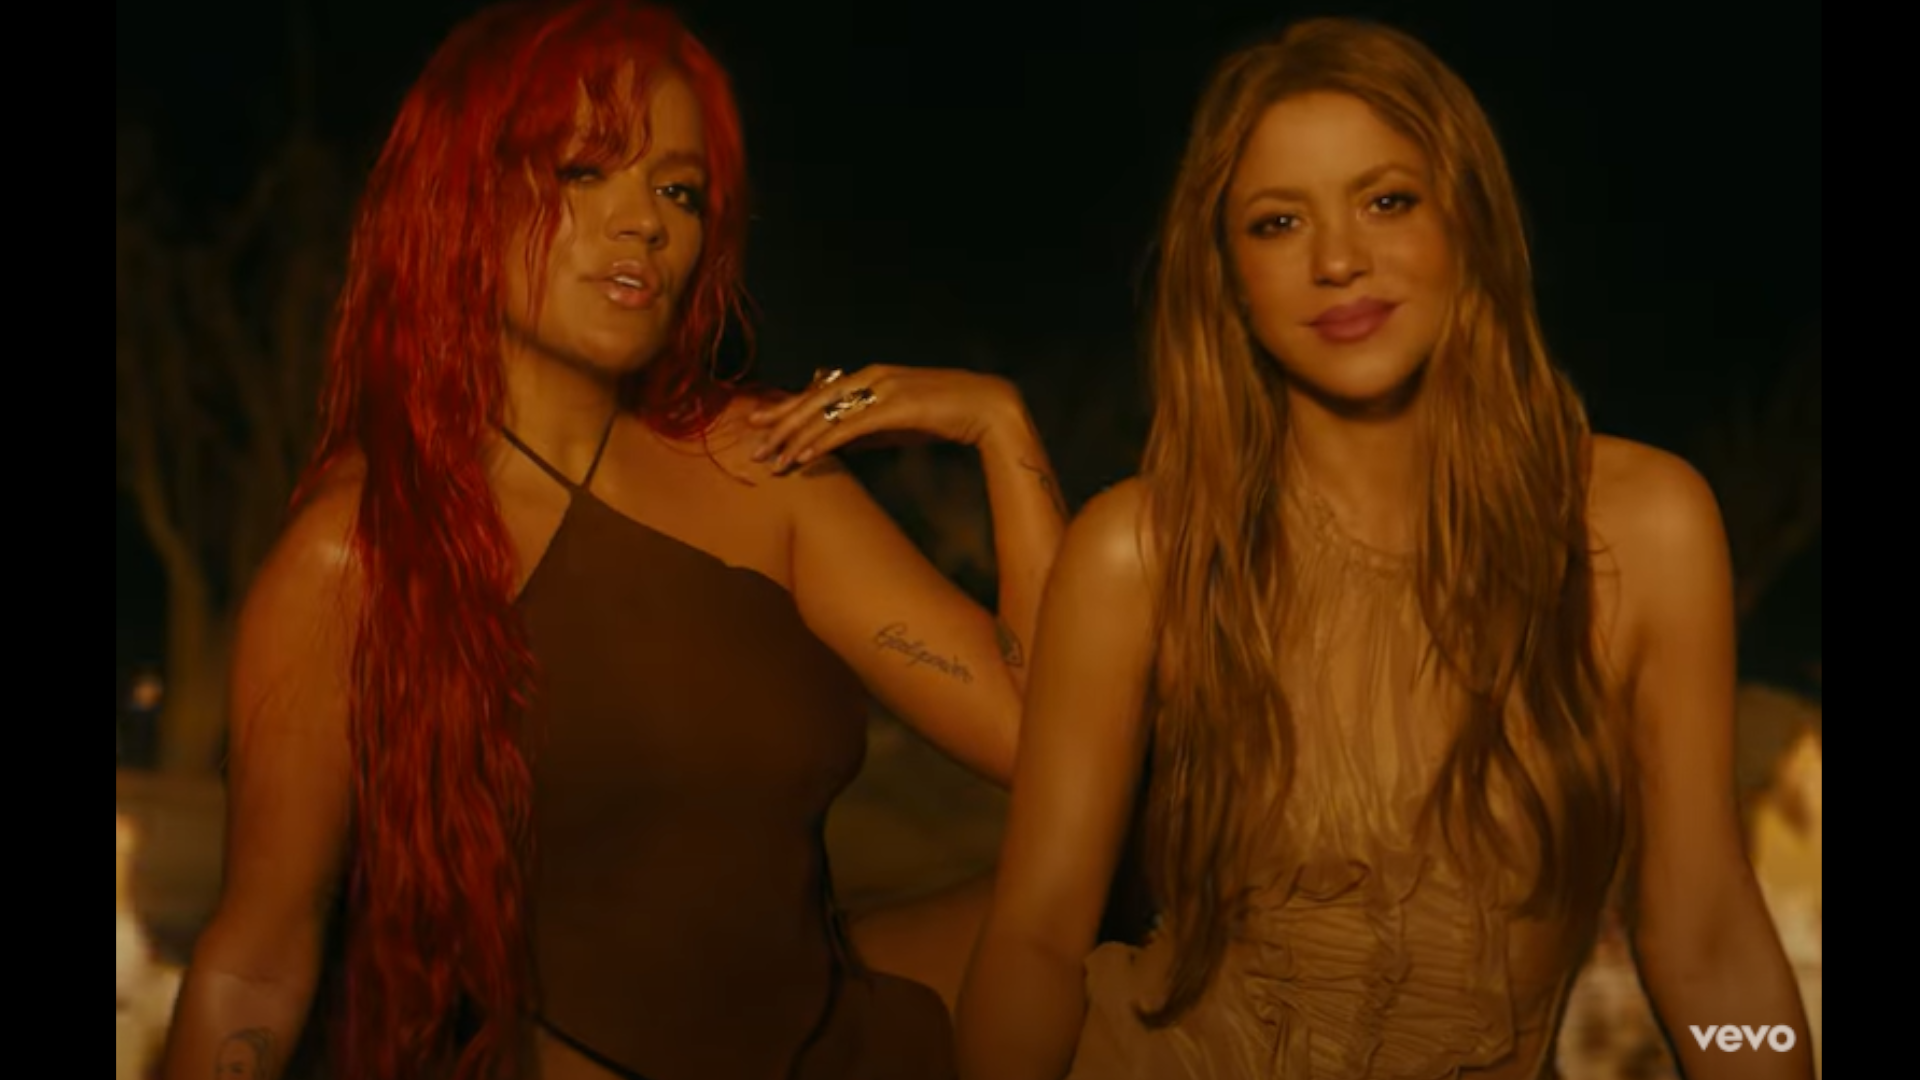 Sakira Xxx - Shakira y Karol G lanzaron el video de TQG, â€œTe quedÃ© grandeâ€: â€œQuÃ© haces  buscÃ¡ndomela si sabes que yo errores no repitoâ€ - Infobae